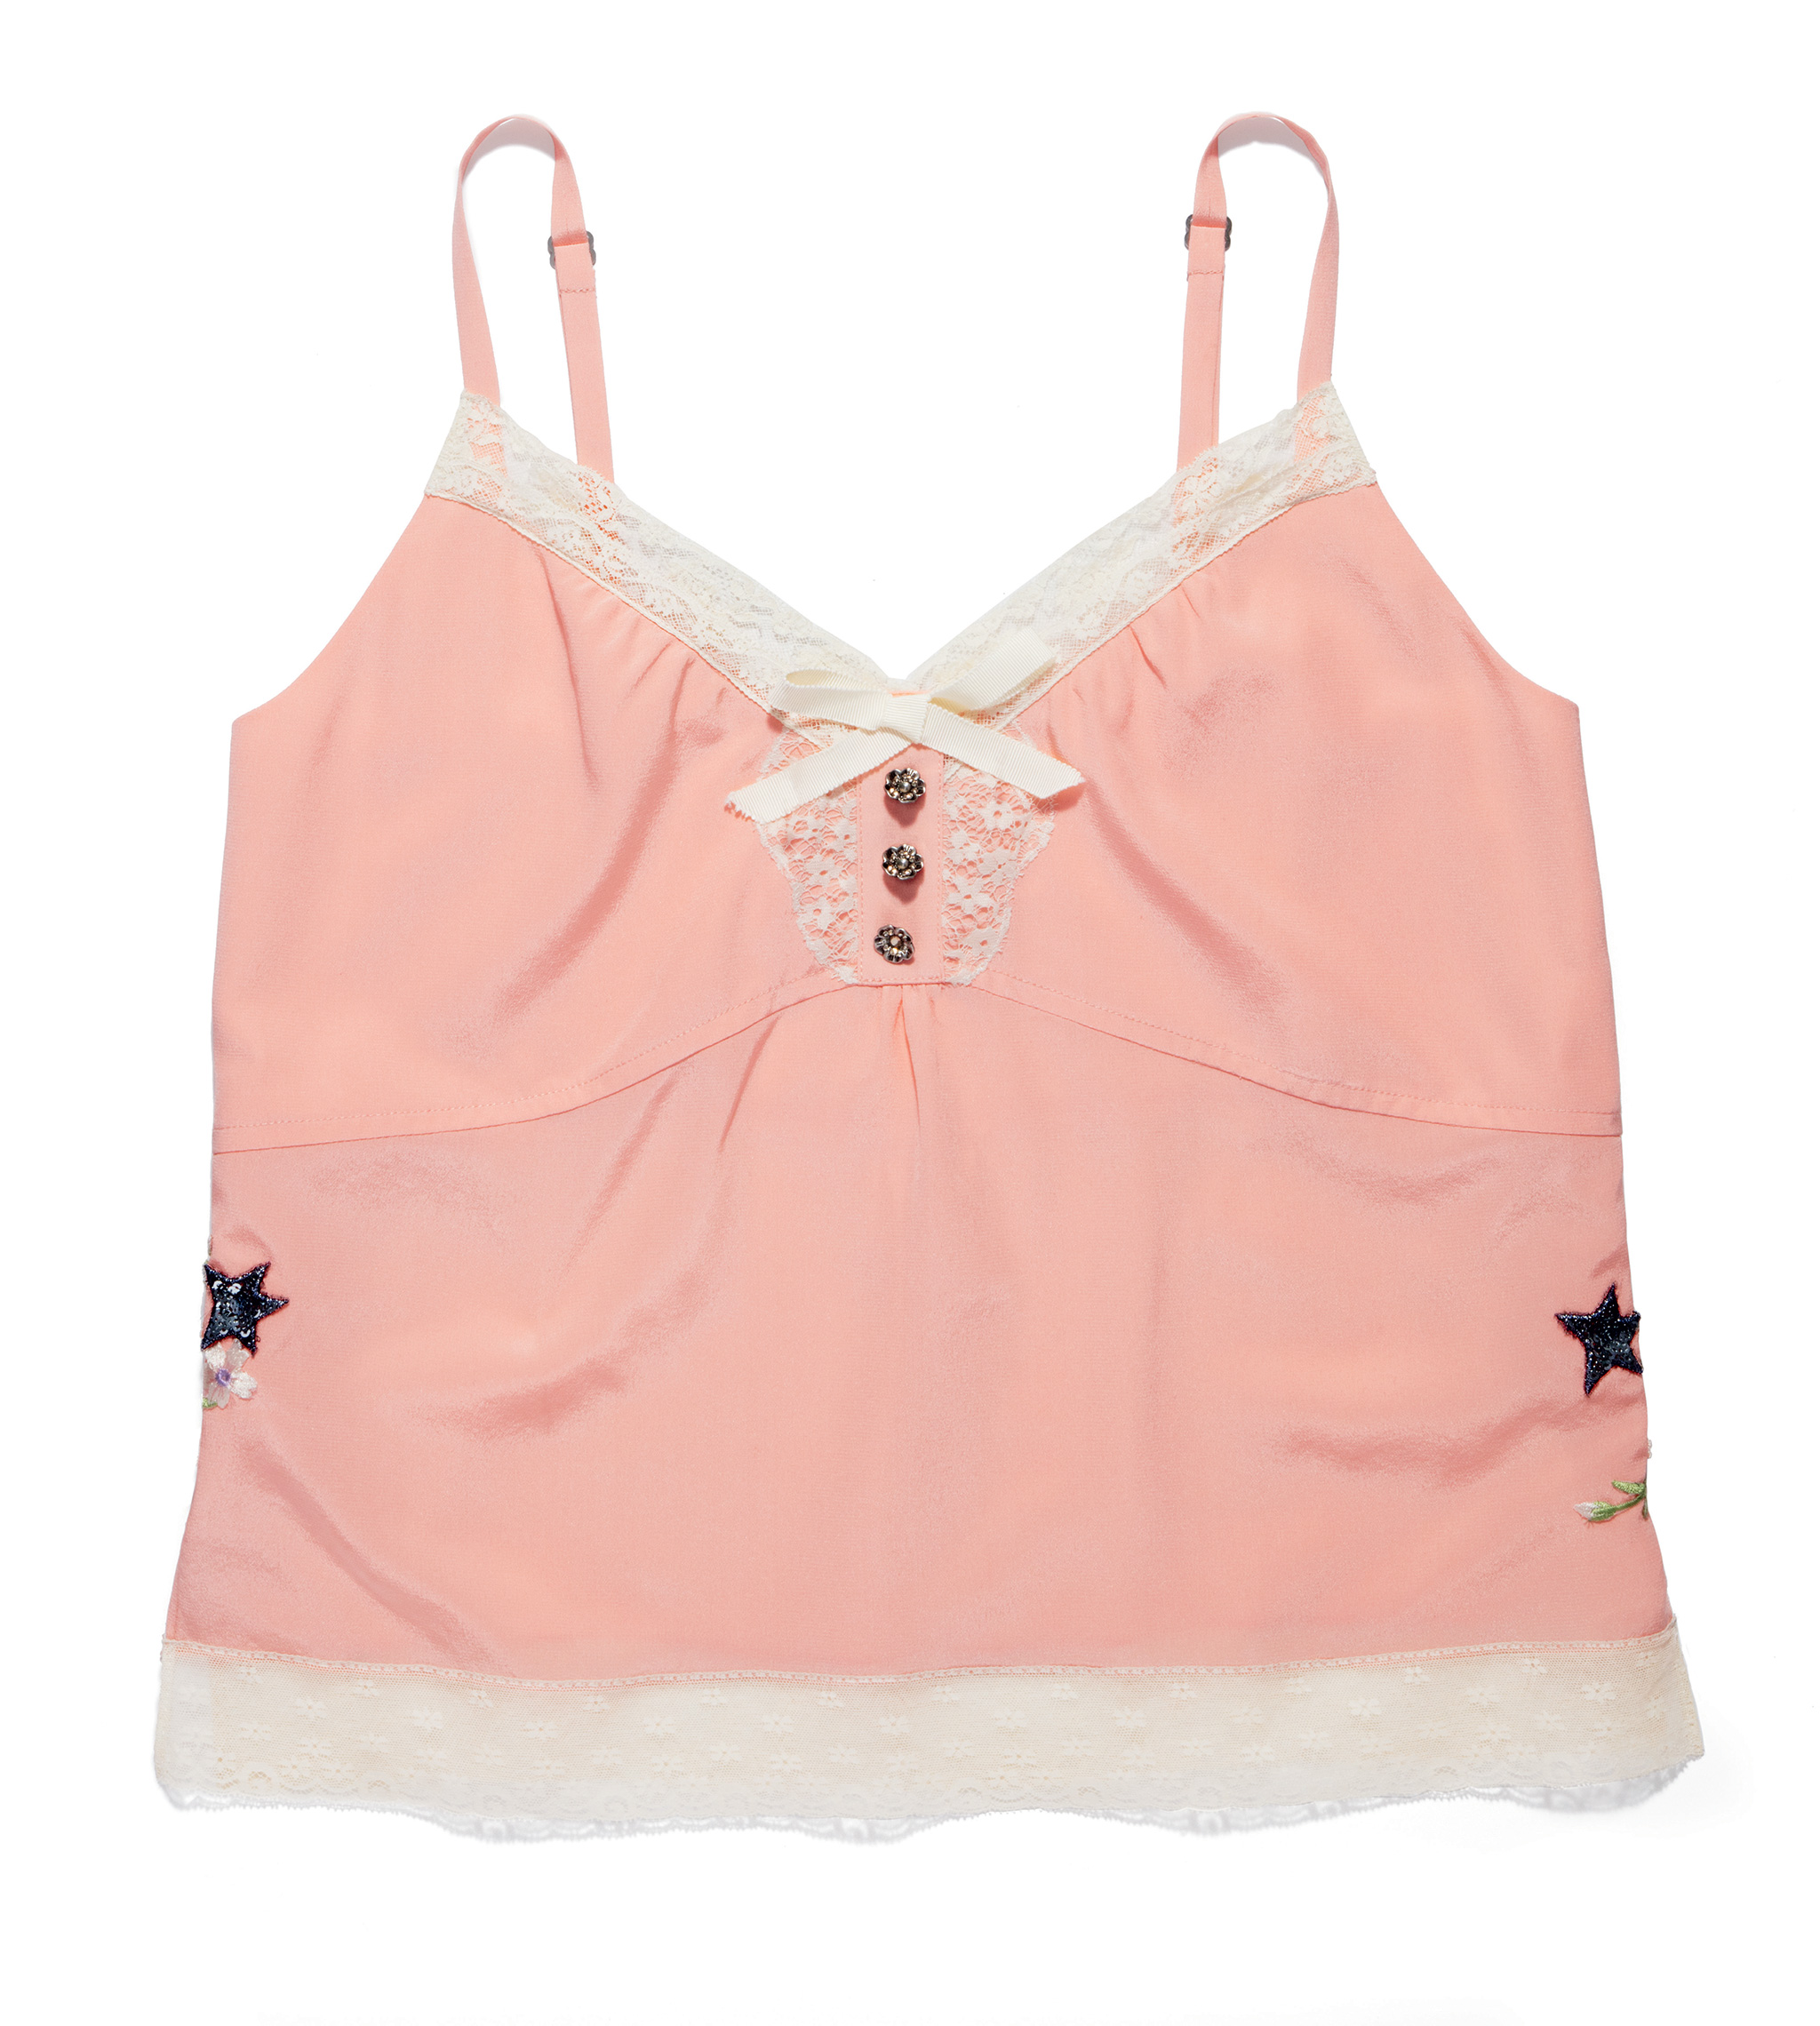 Gorgeous Ballet Pink Coach Purse x Selena Gomez - clothing & accessories -  by owner - apparel sale - craigslist